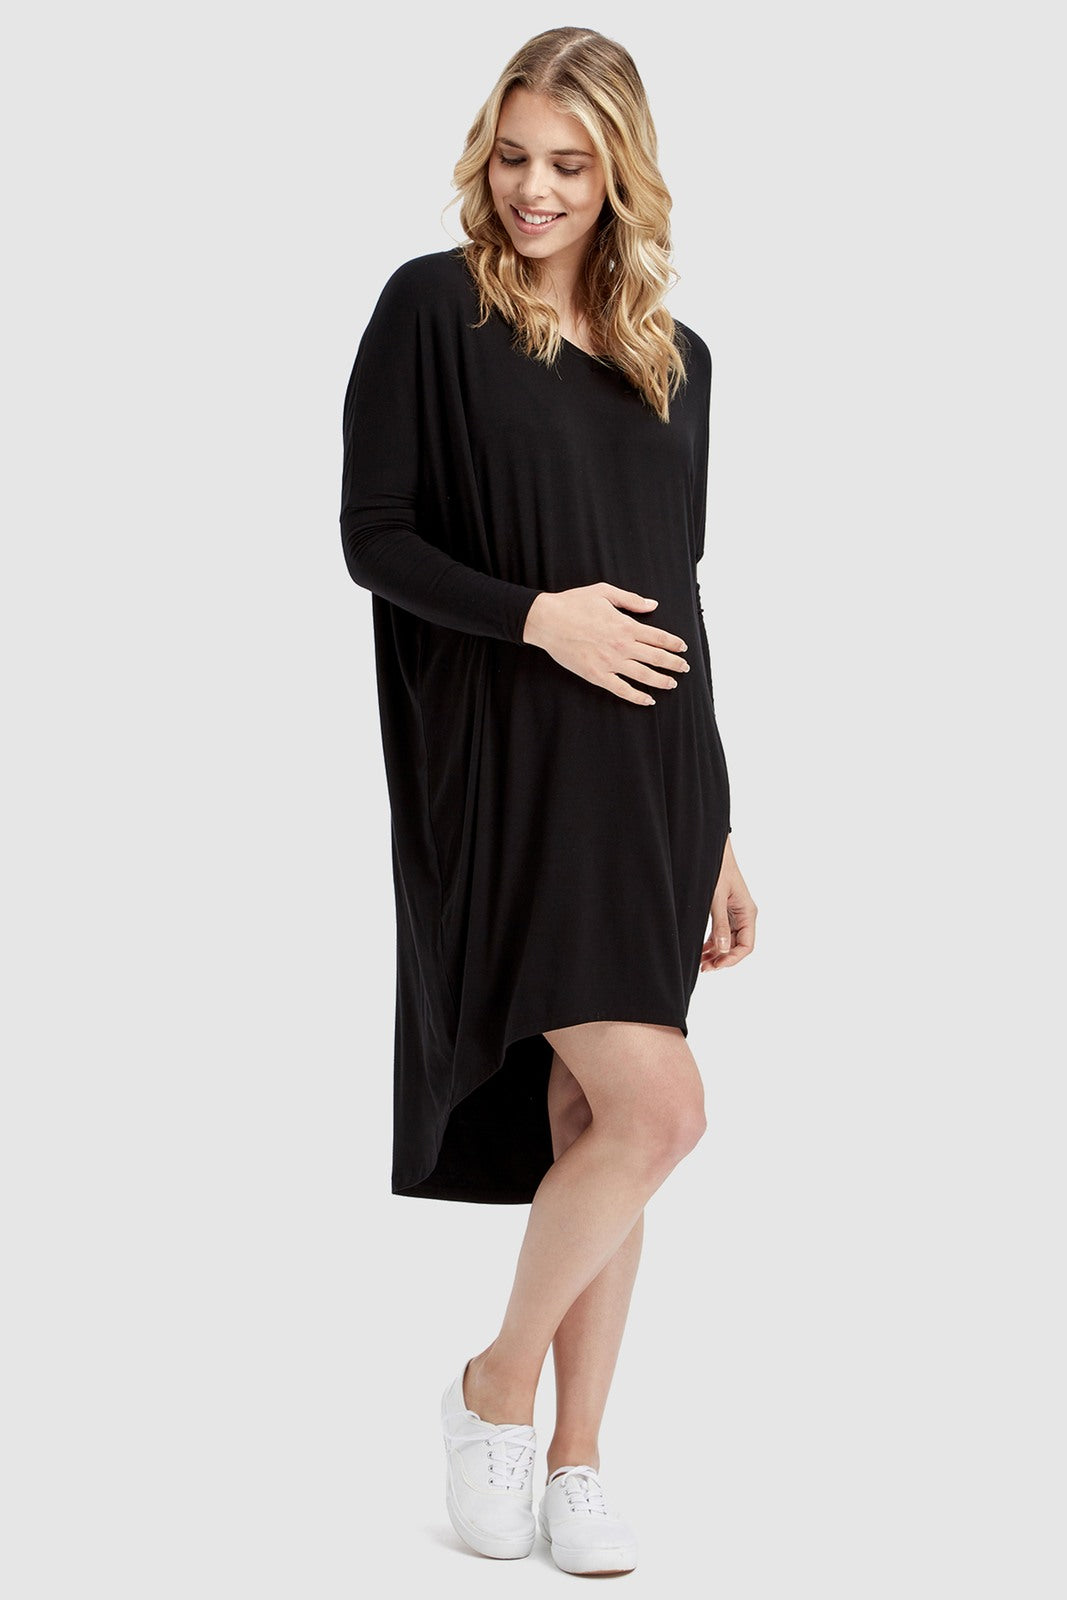 Organic Bamboo Catherine Maternity Dress  from Bamboo Body maternity online store brisbane sydney perth australia